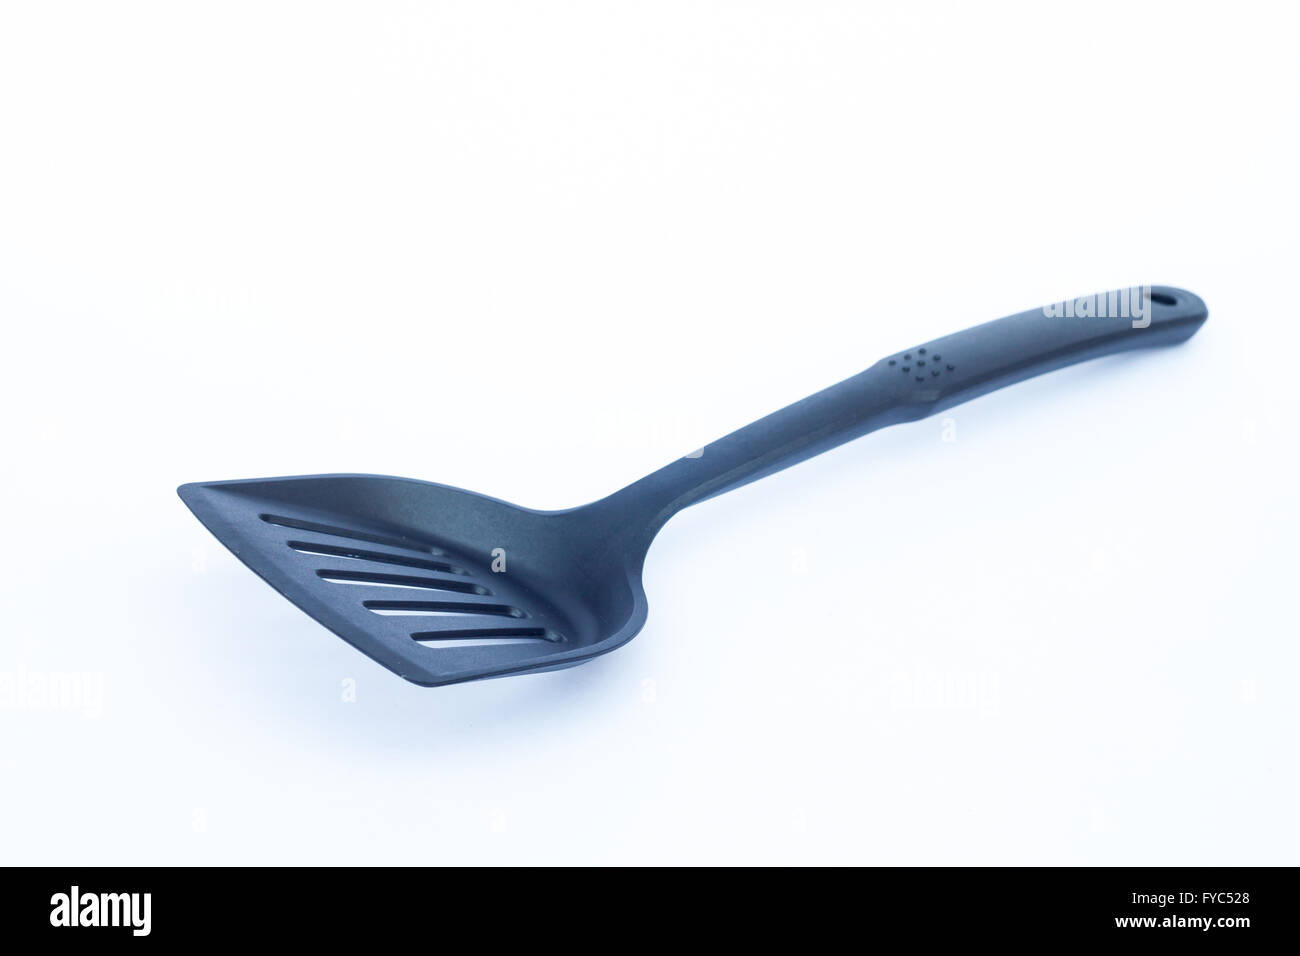 Black plastic kitchen spatula on white background, stock photo Stock Photo